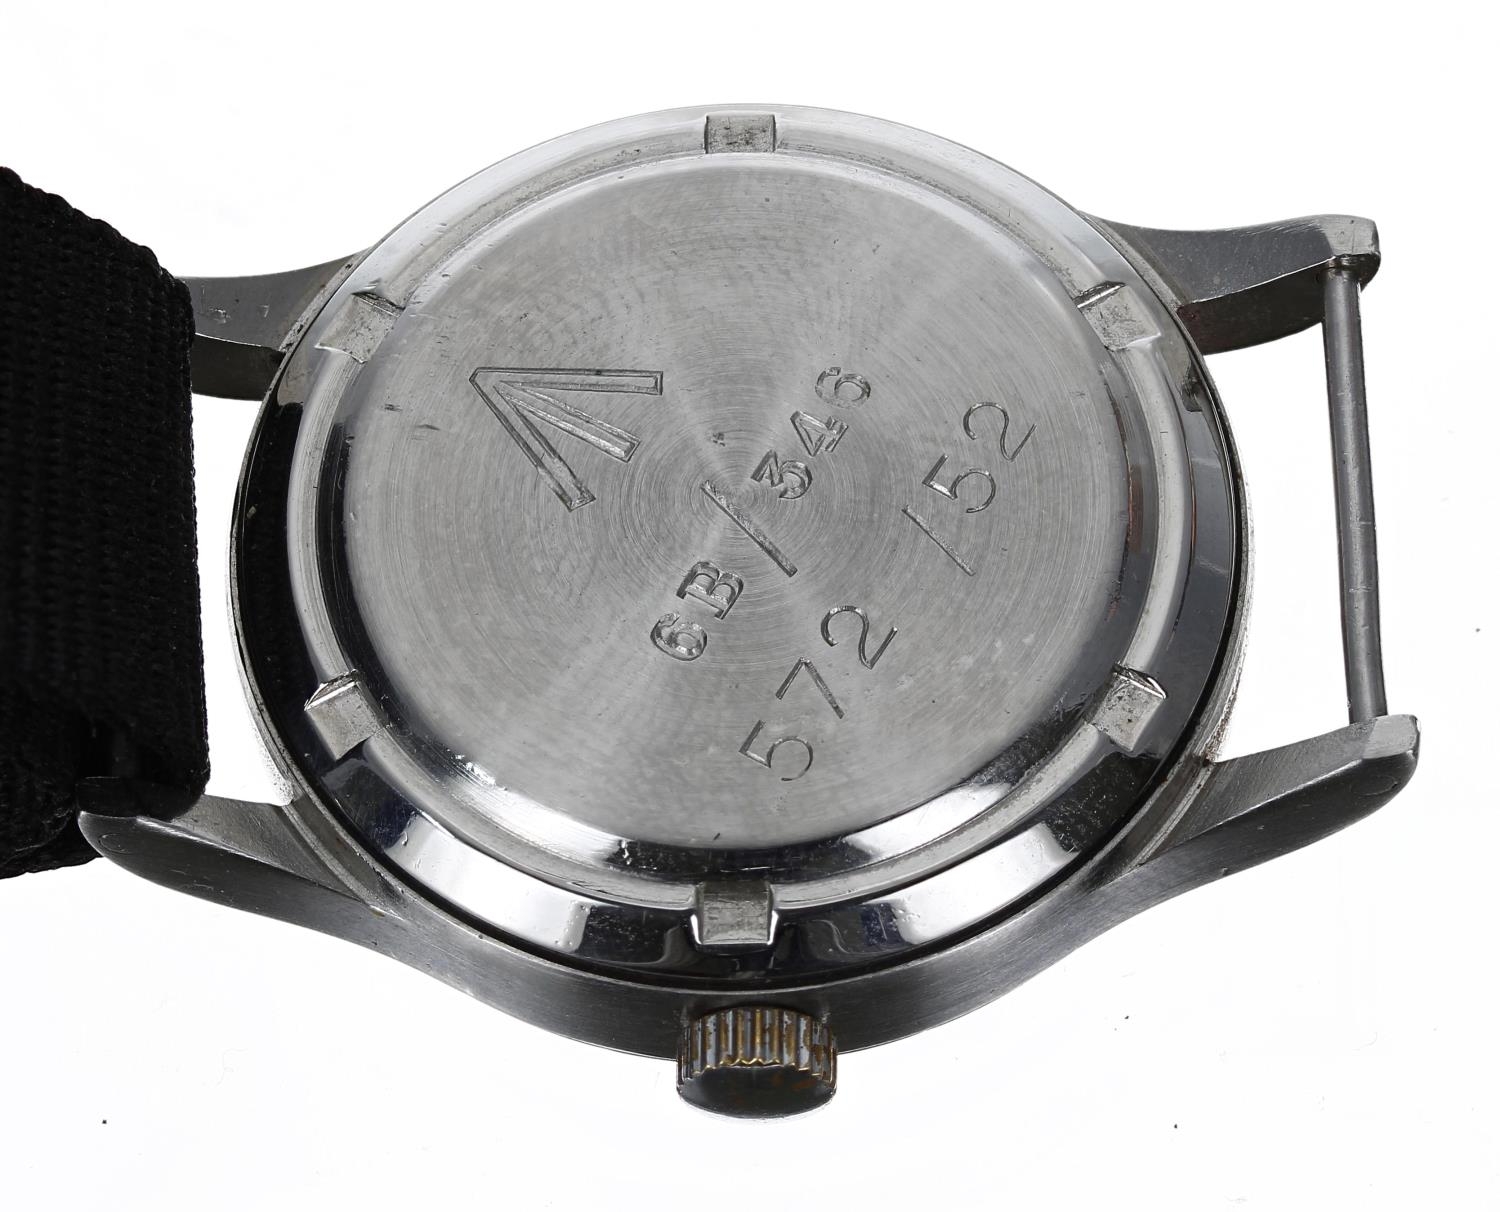 International Watch Co. (IWC) Mark 11 British Military RAF pilot's stainless steel wristwatch, circa - Image 2 of 3